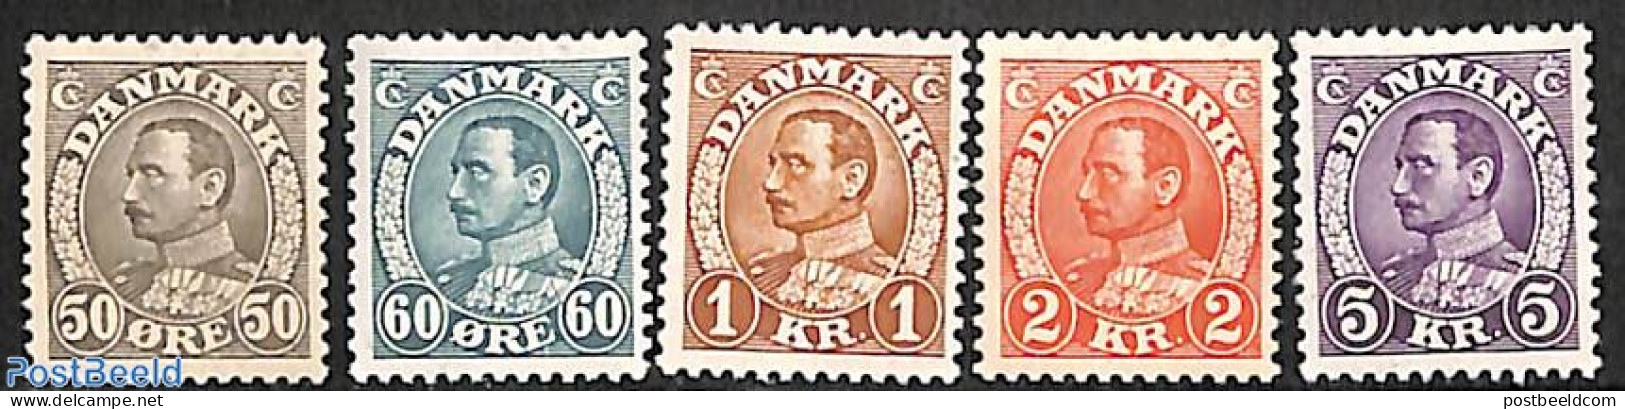 Denmark 1934 Definitives 5v, Mint NH - Ungebraucht